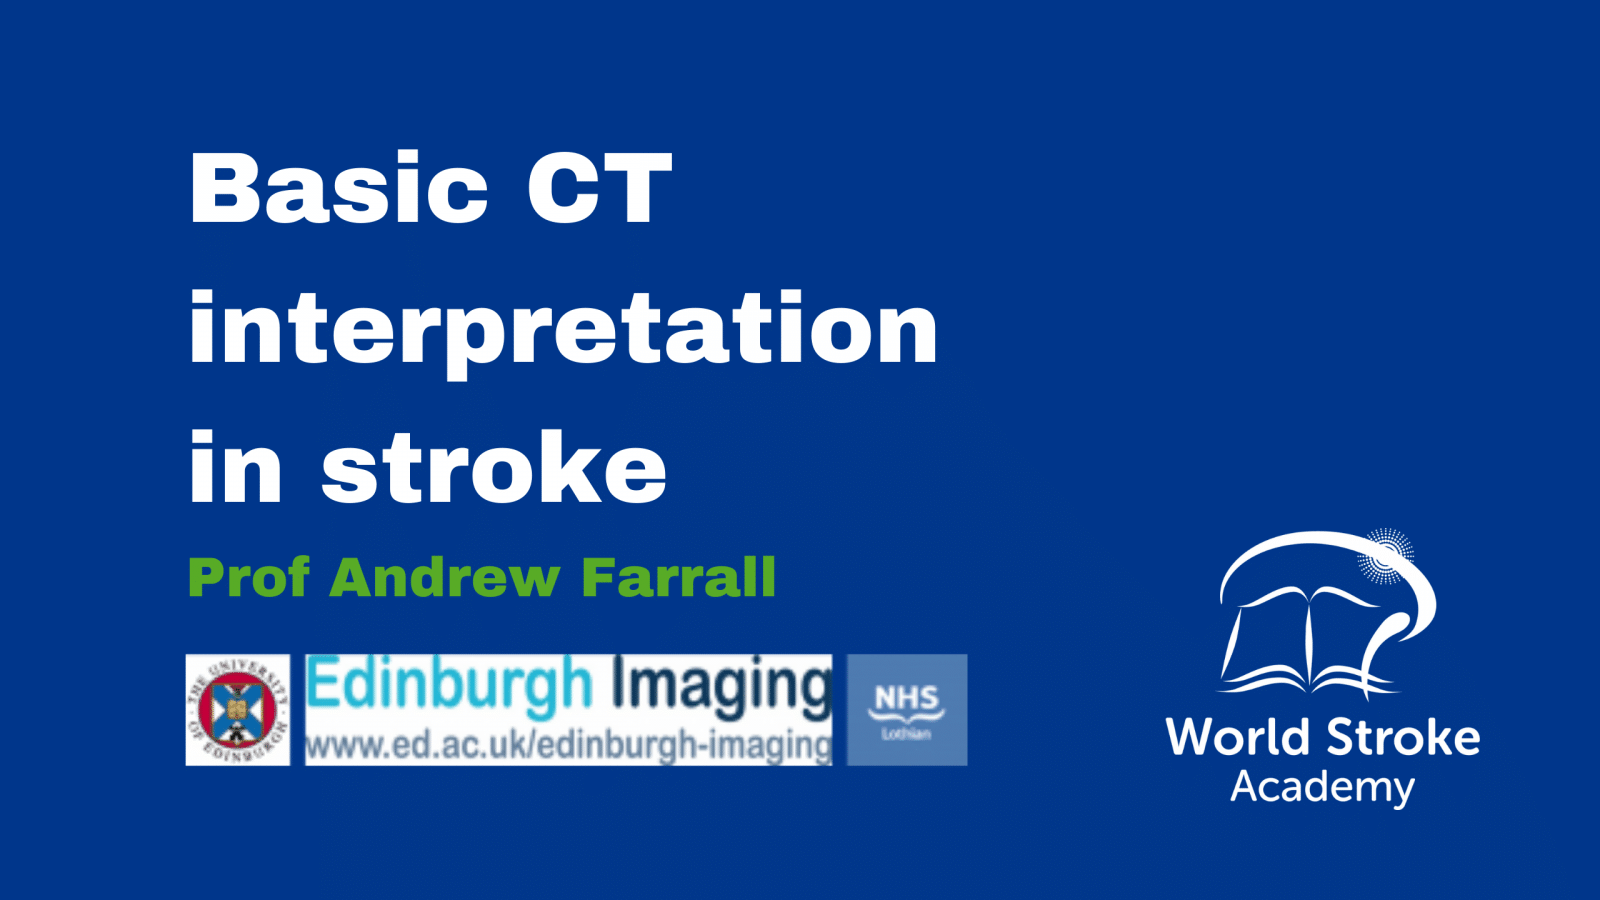 Basic CT interpretation and stroke